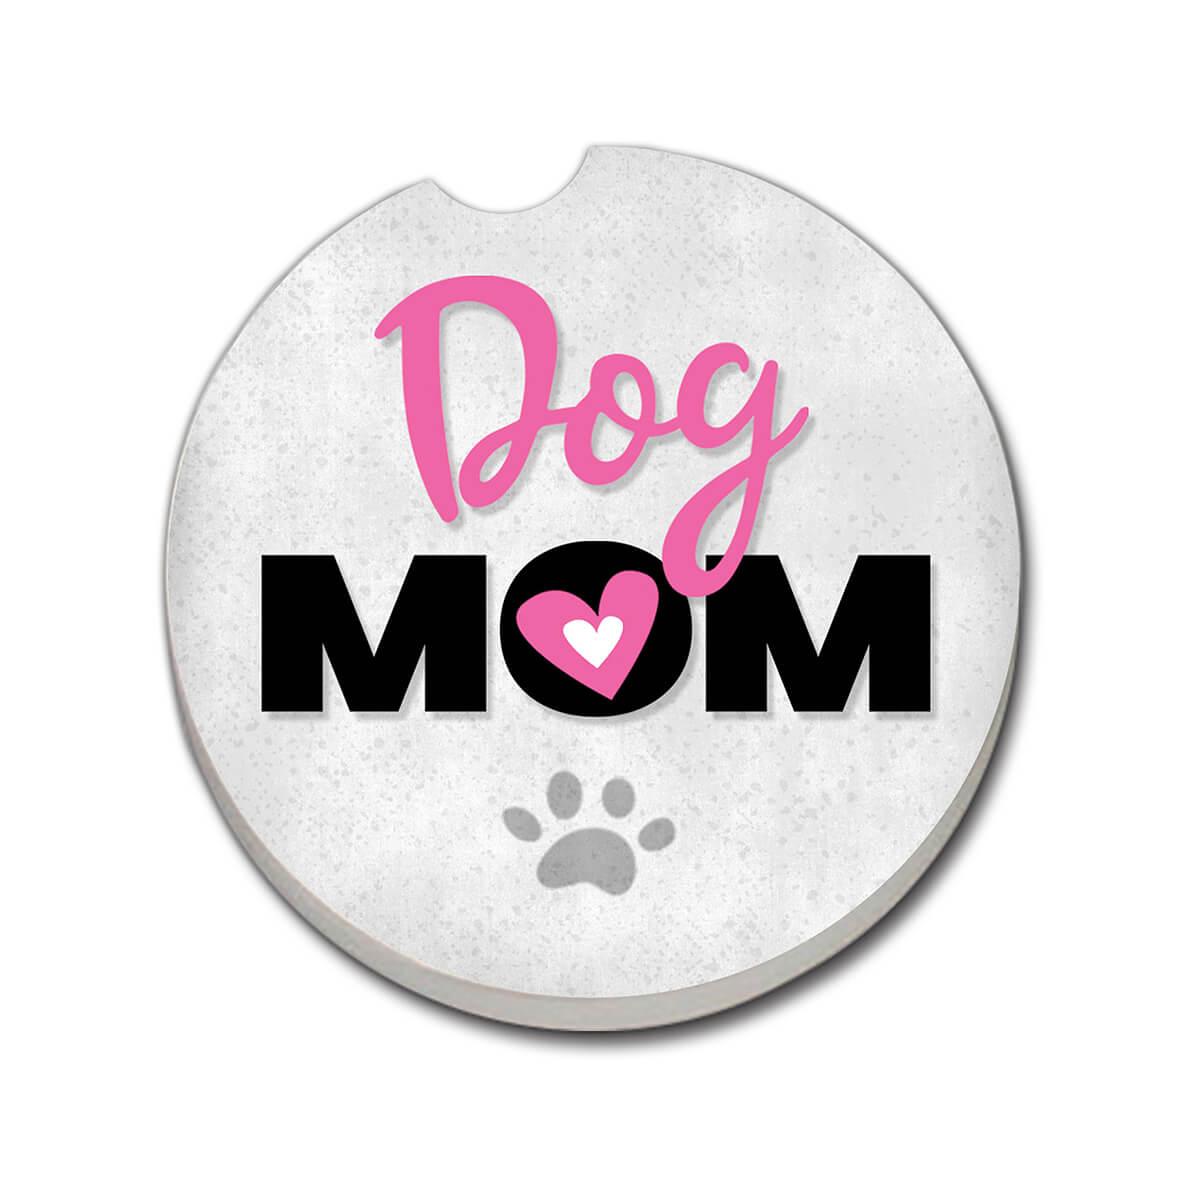  Dog Mom Car Coaster